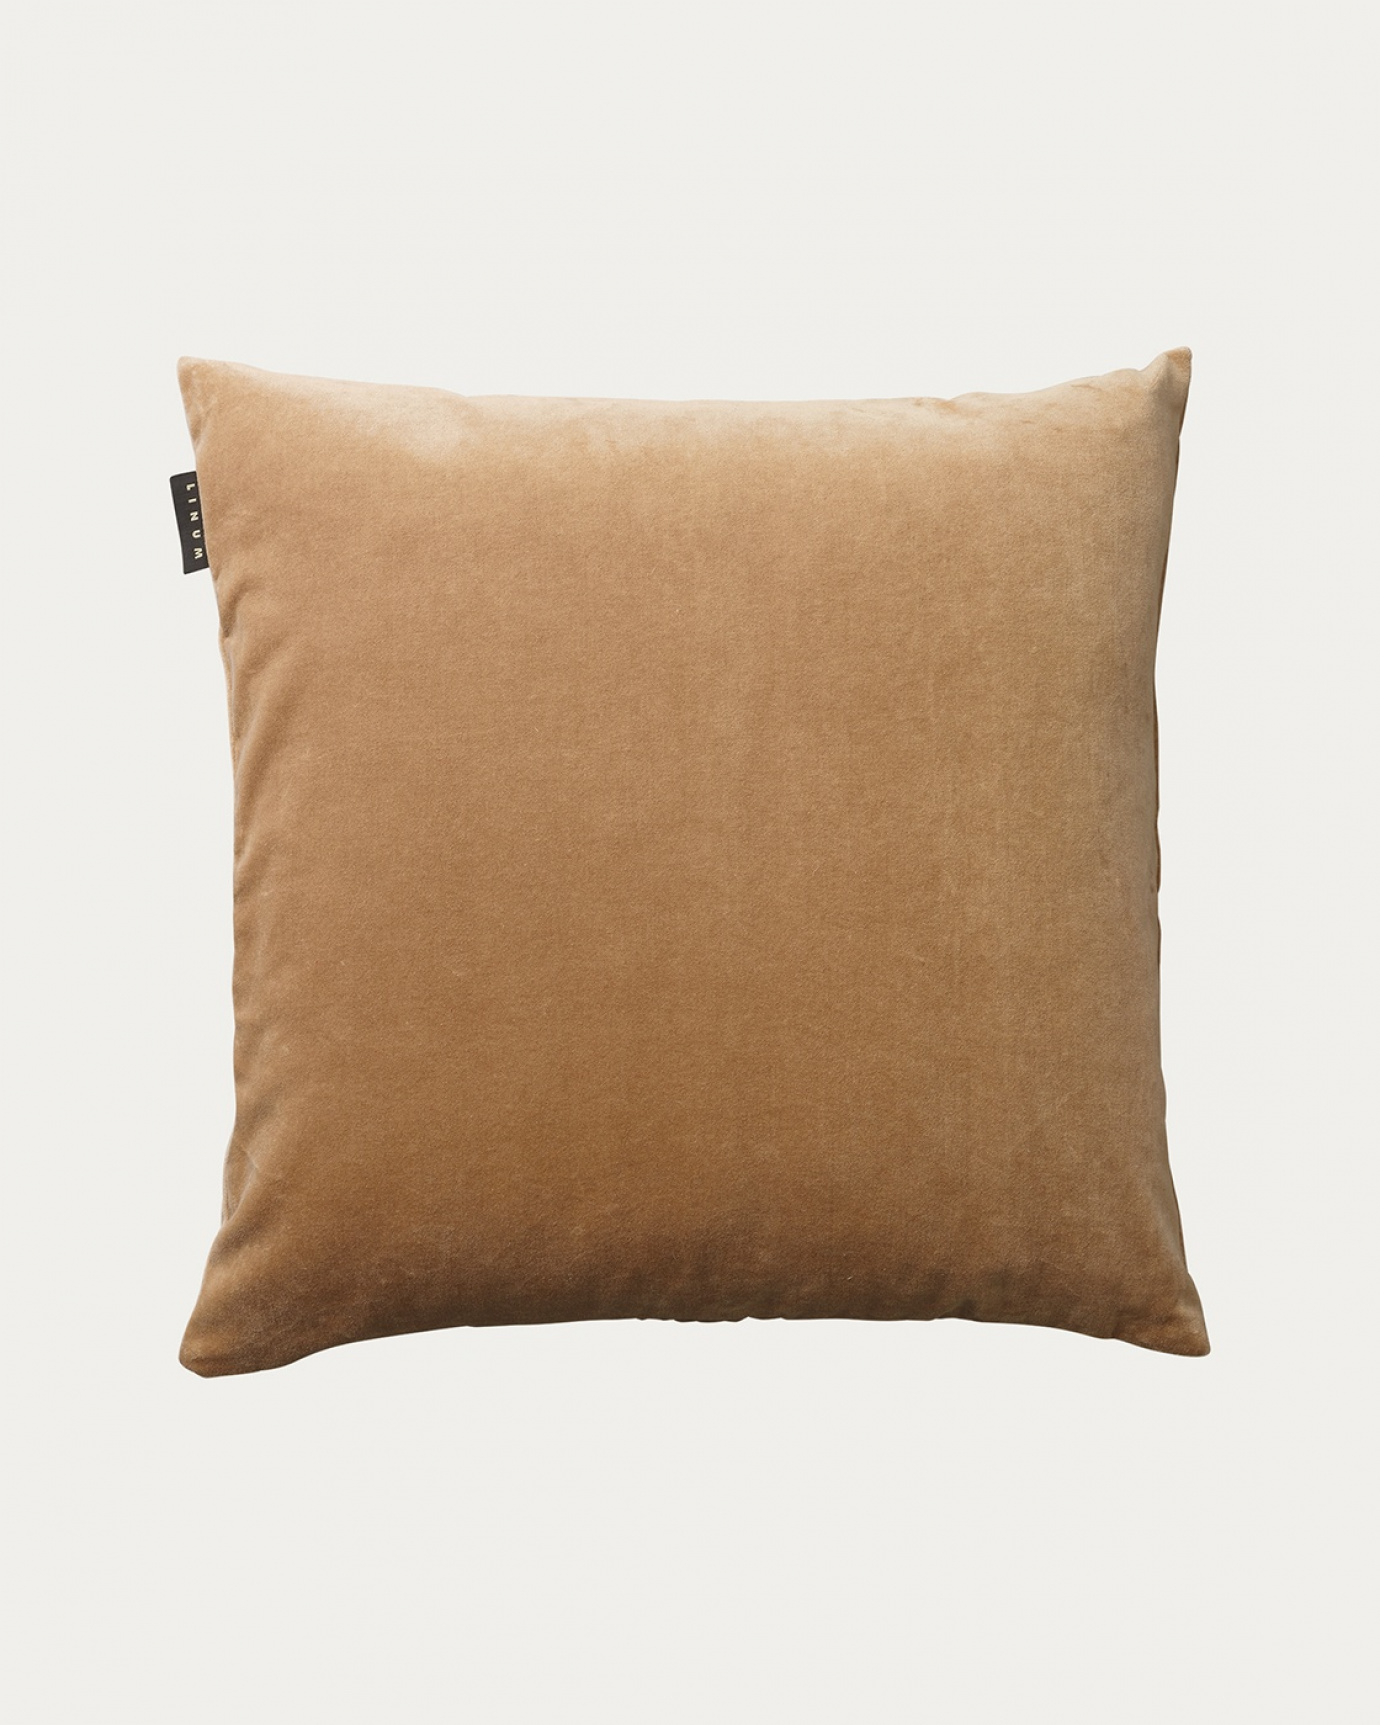 Produktbild kamelbrun PAOLO kuddfodral av mjuk bomullssammet från LINUM DESIGN. Storlek 50x50 cm.